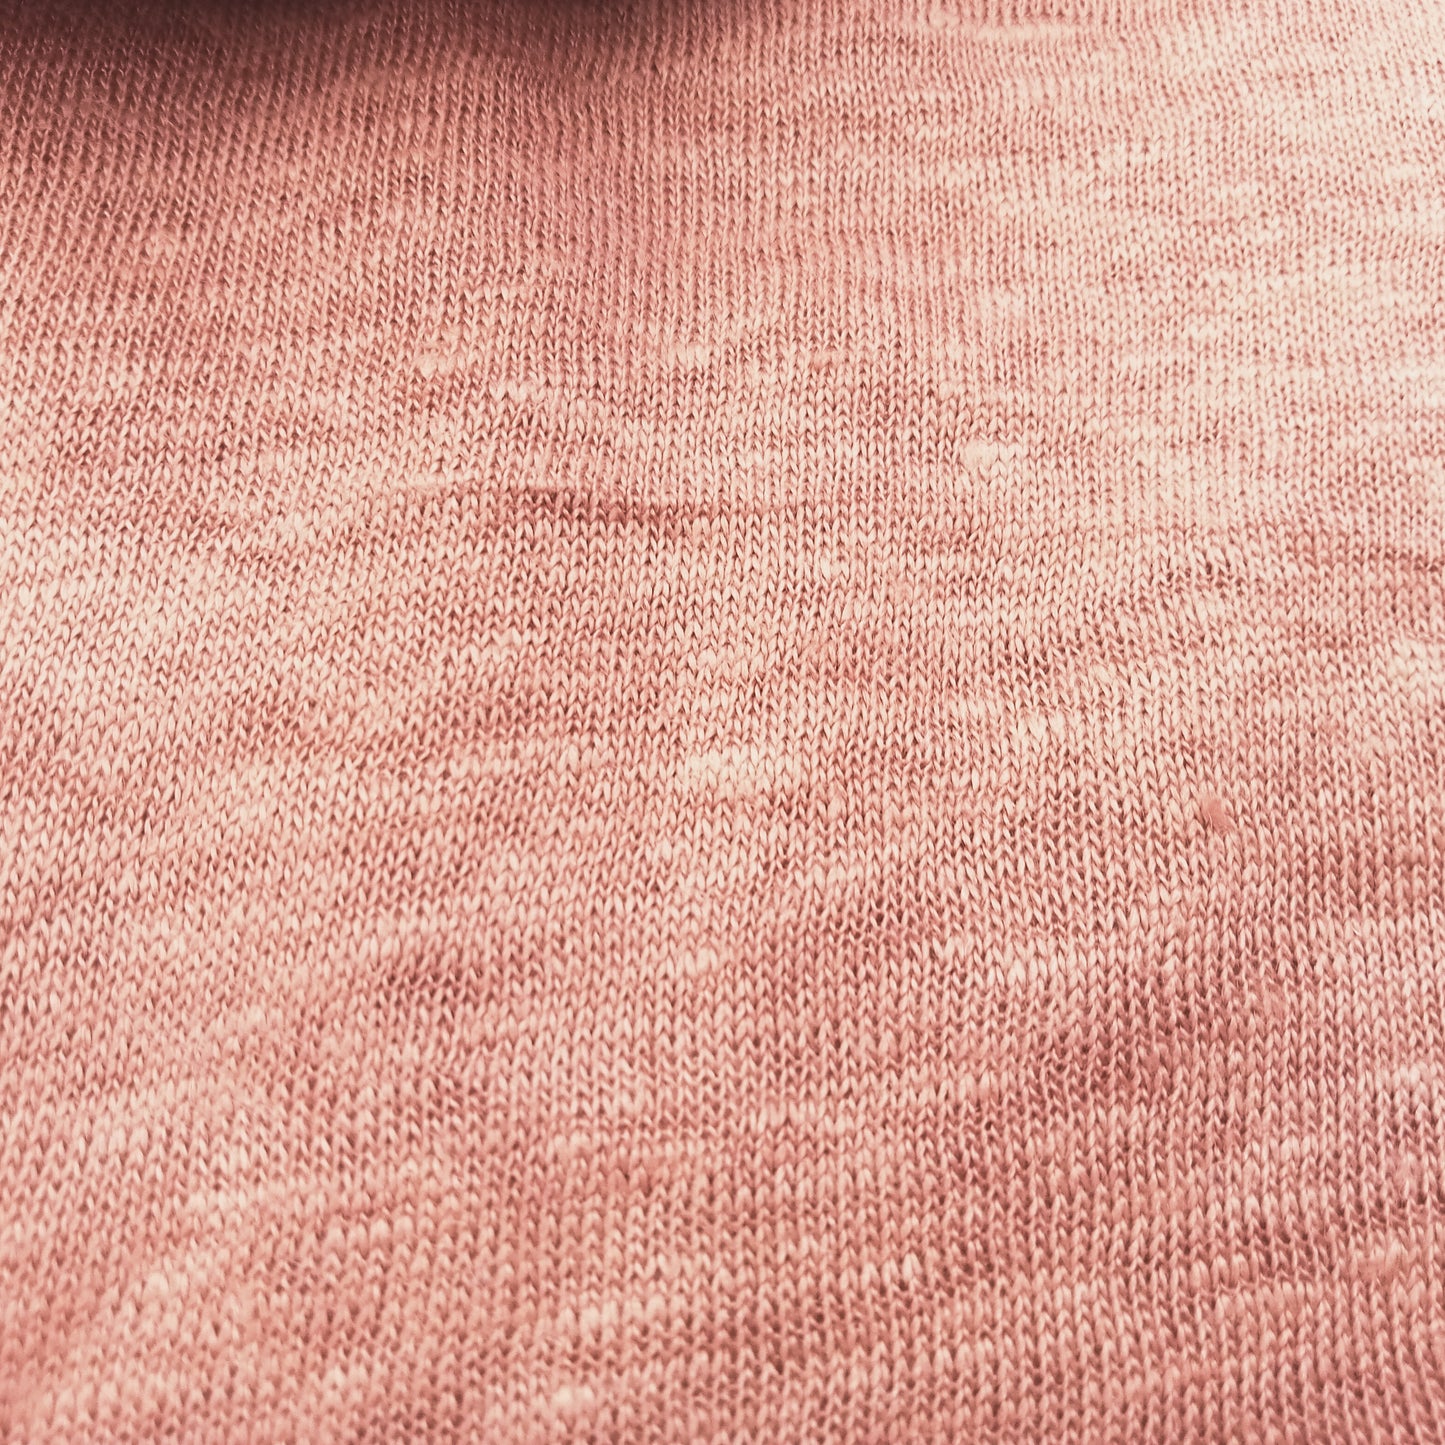 Savannah - antique rose knit fabric